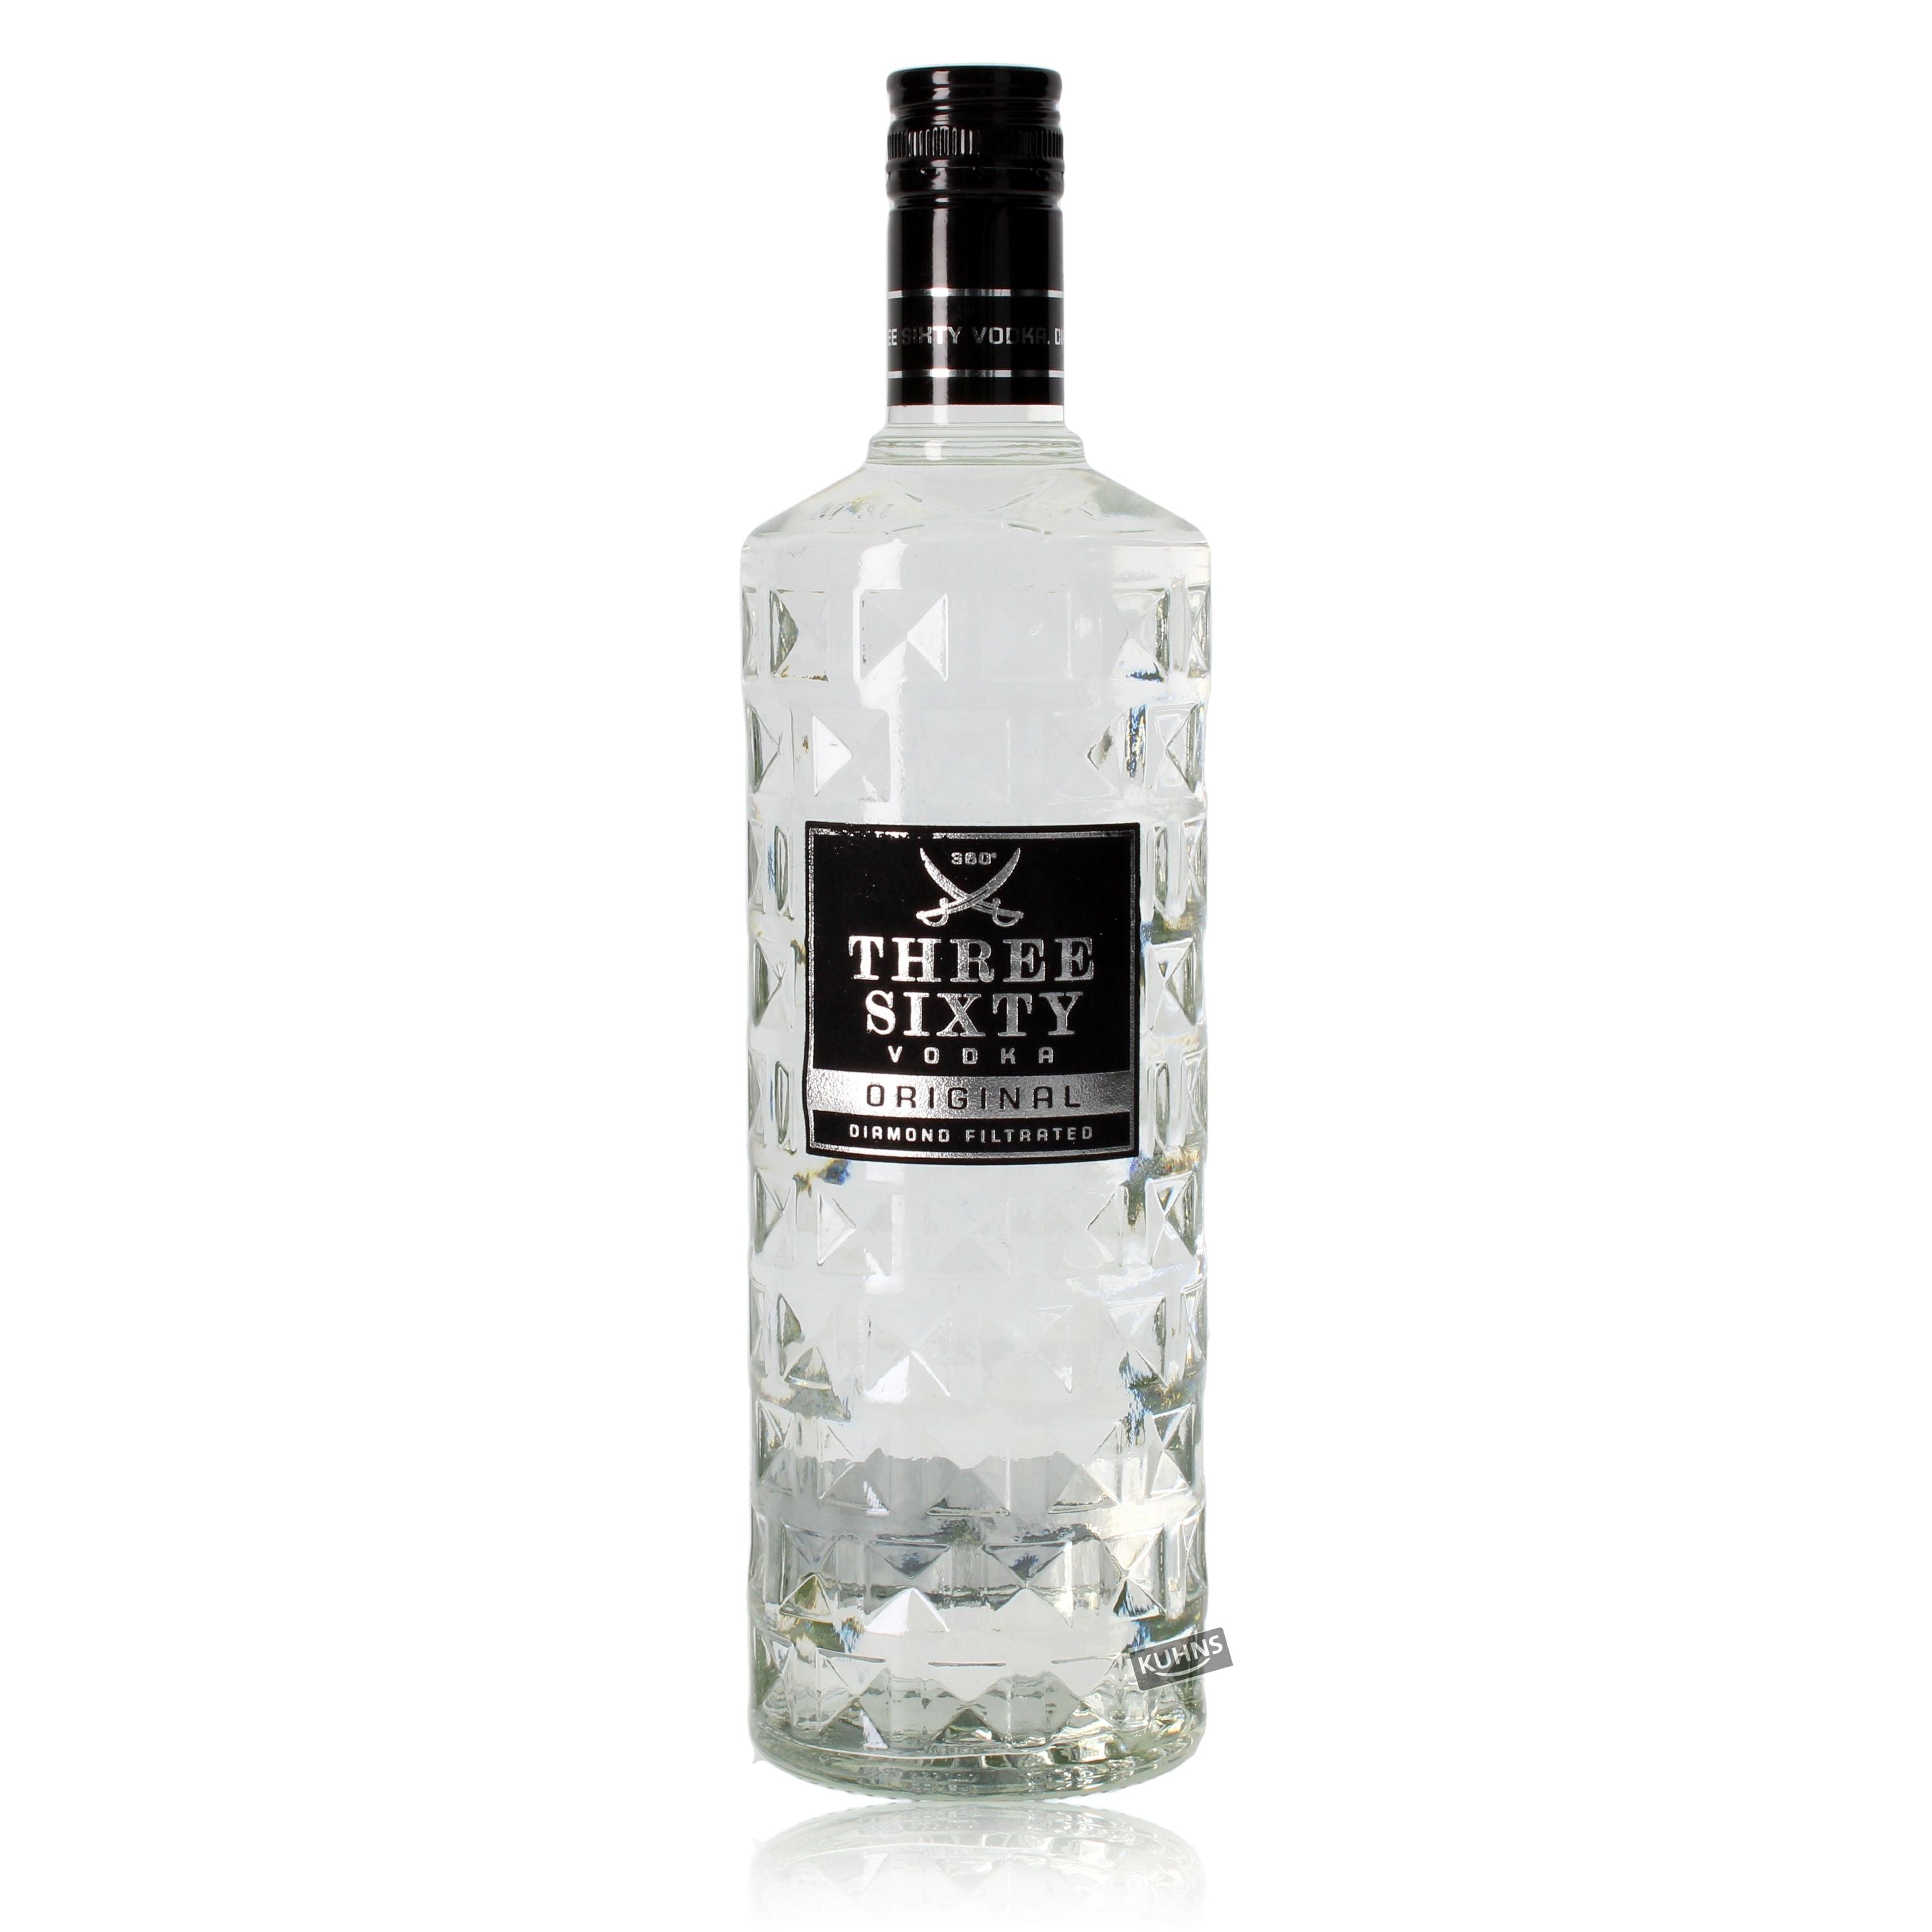 Three Sixty Vodka 1.0l, alc. 37.5% by volume, vodka Germany